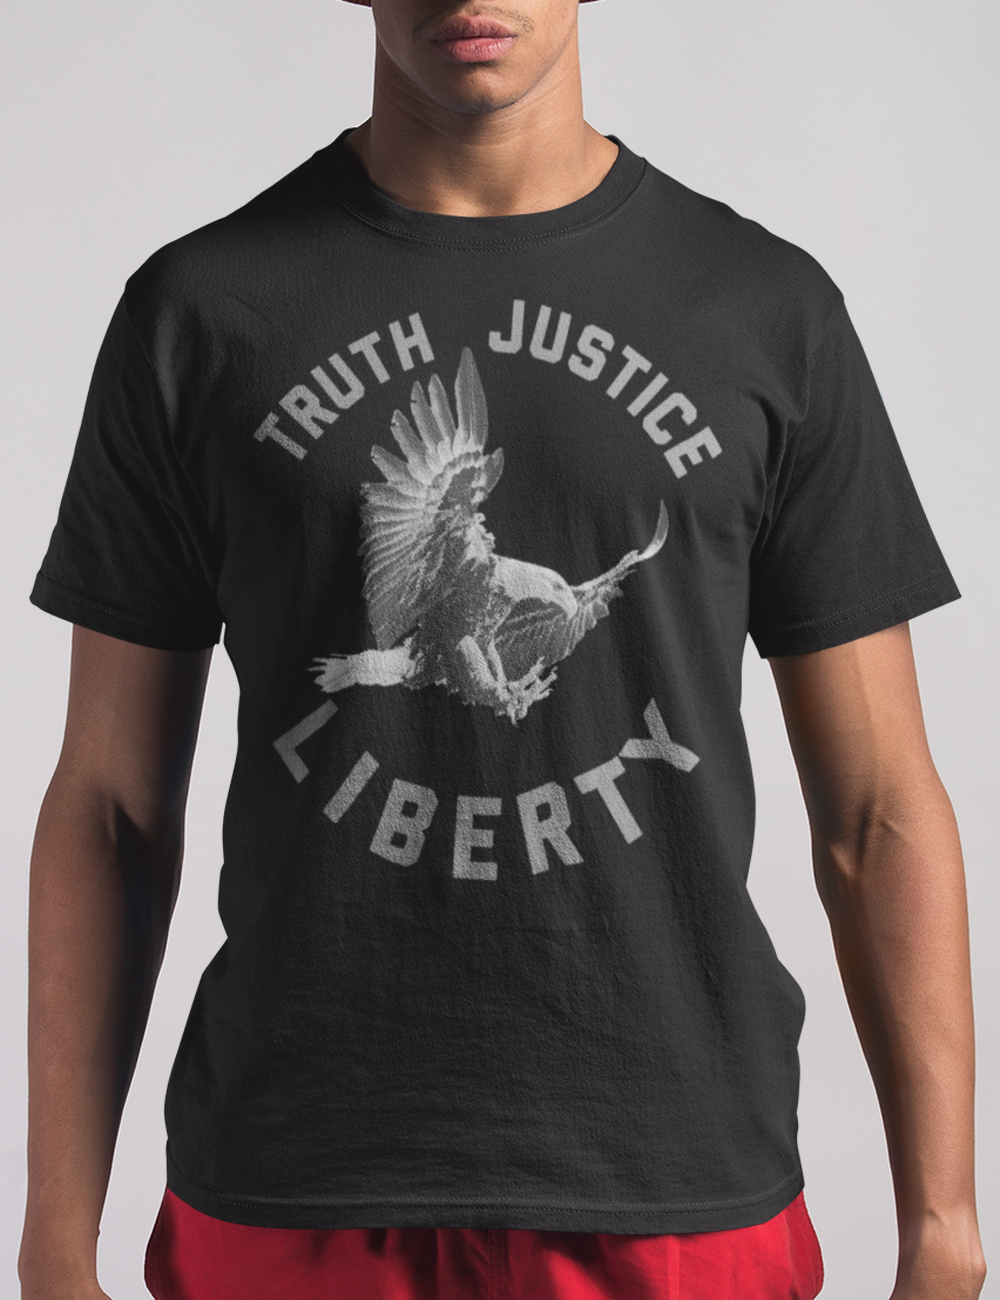 Truth Justice Liberty | T-Shirt OniTakai